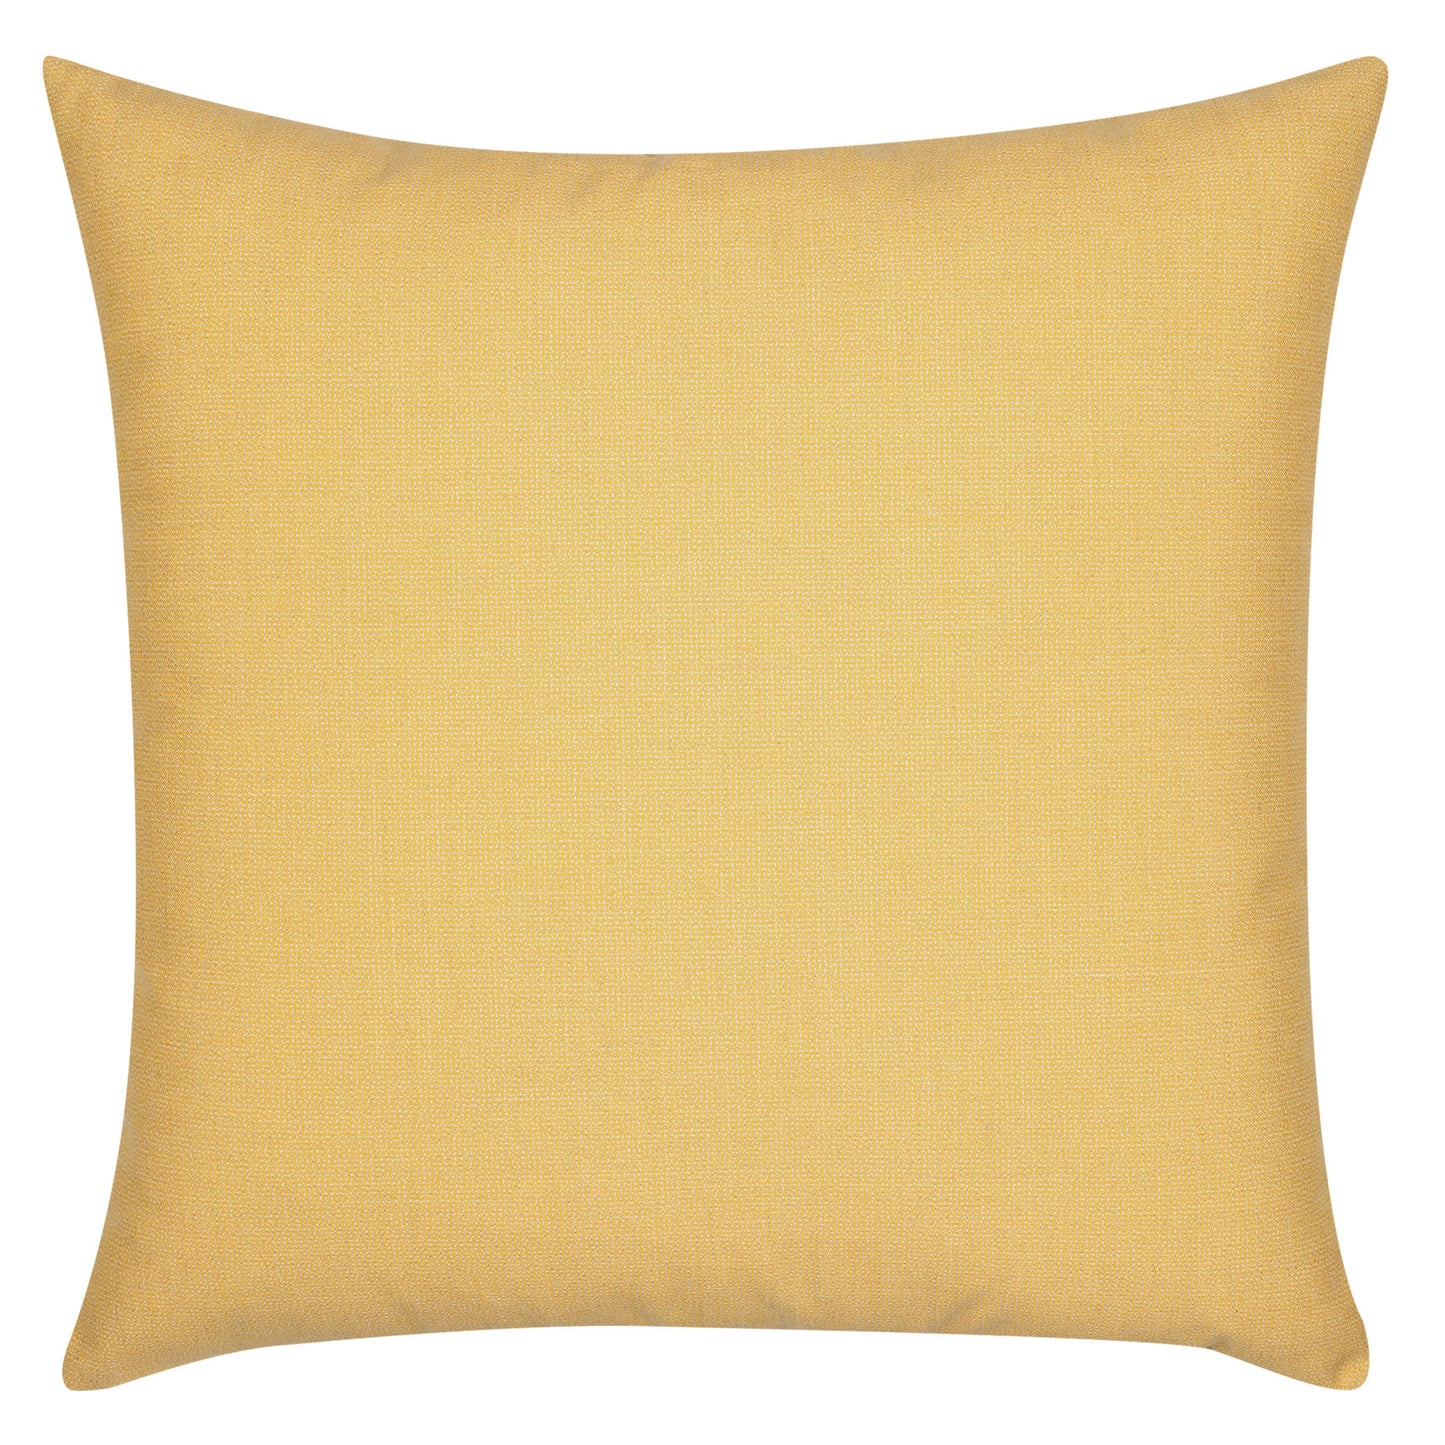 Elaine Smith 22 Square Pillow Solid Lemon, image 1